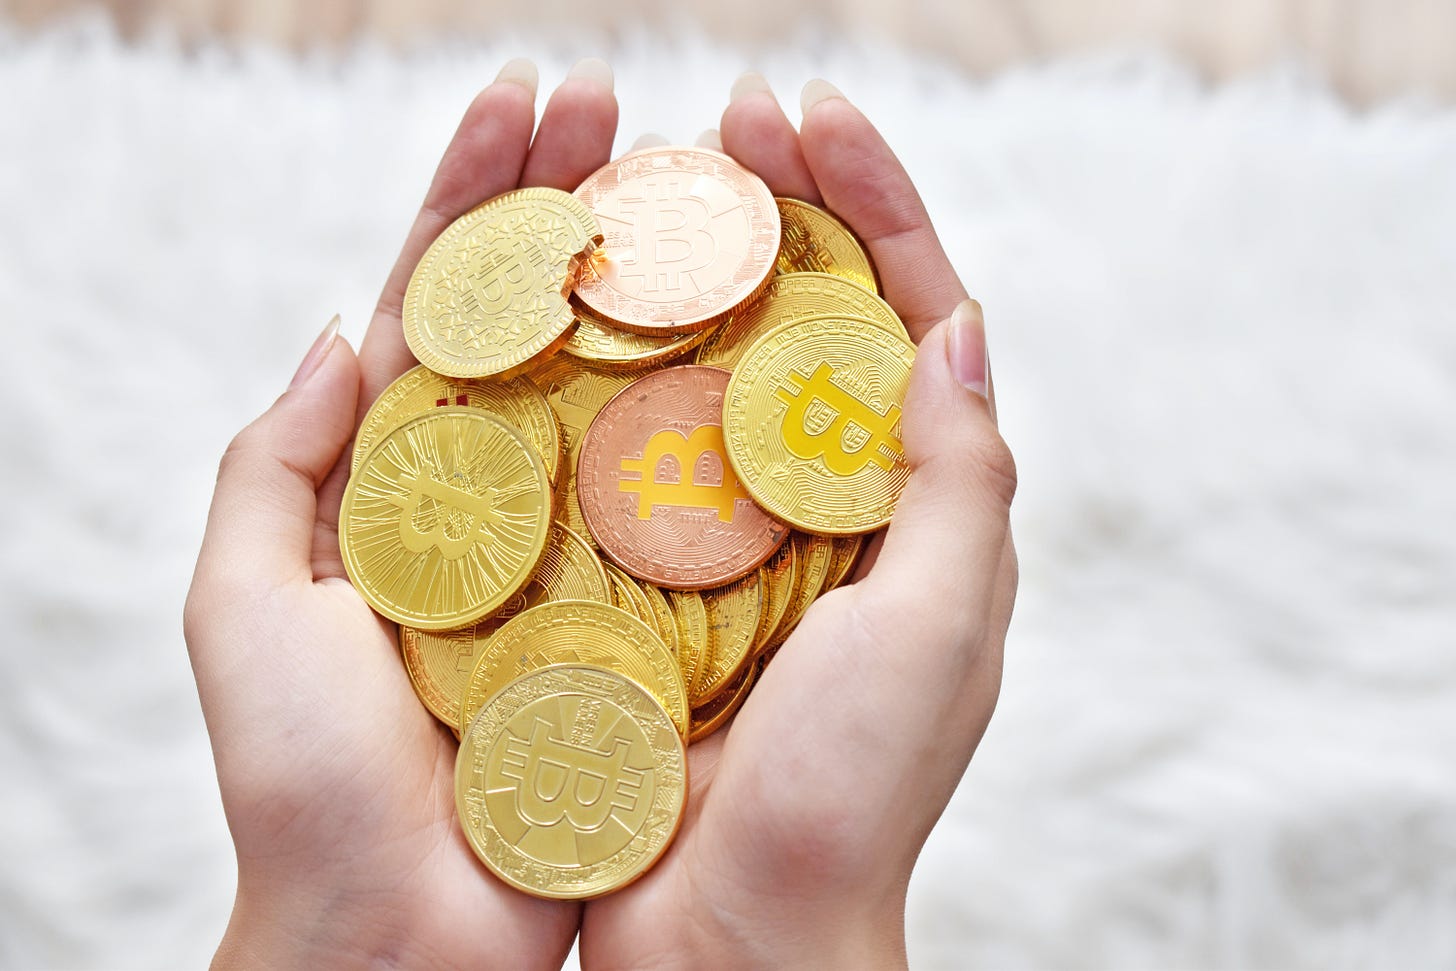 Novelty Bitcoin tokens held in a hand. Via Unsplash